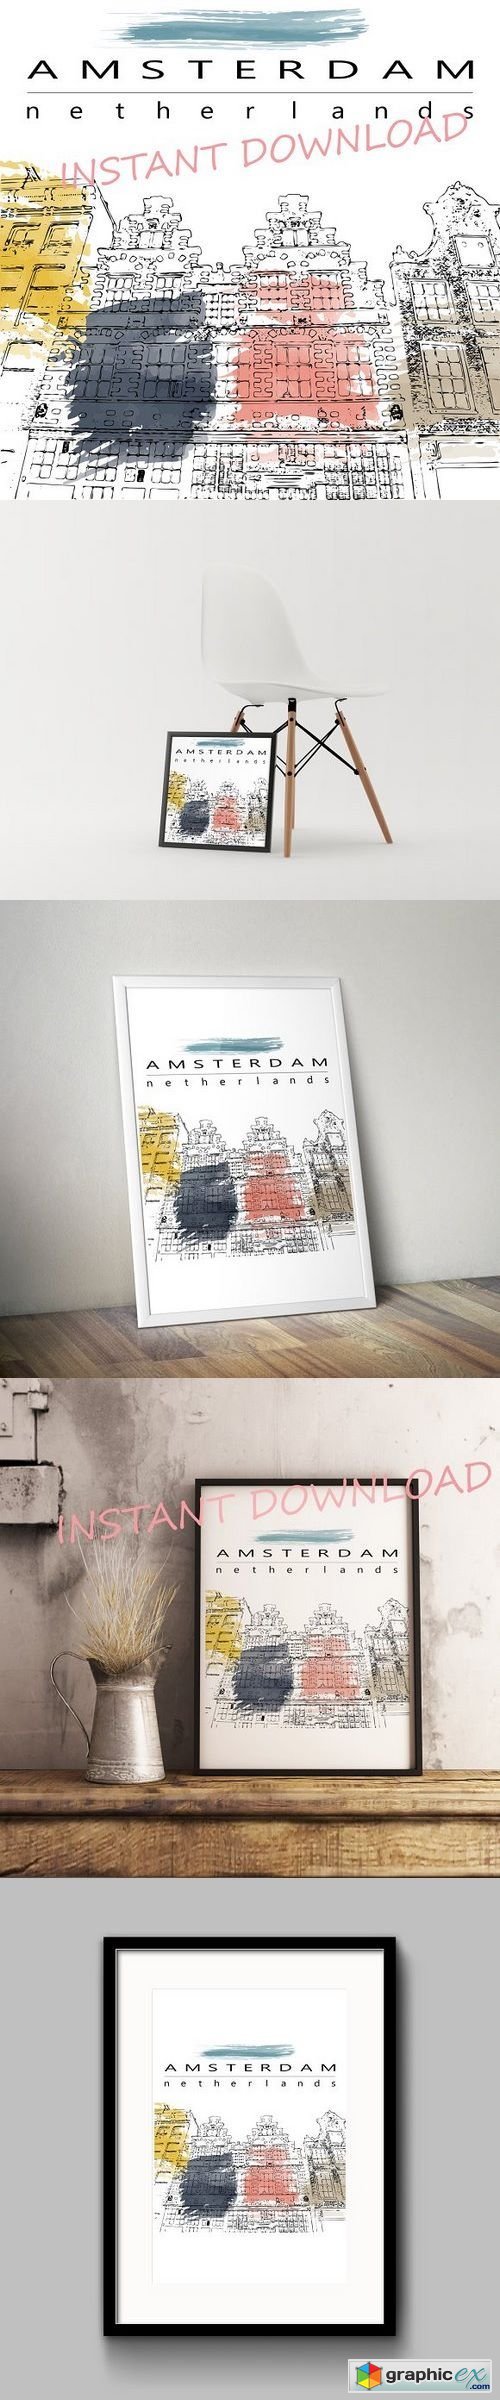 Amsterdam houses sketch illustration